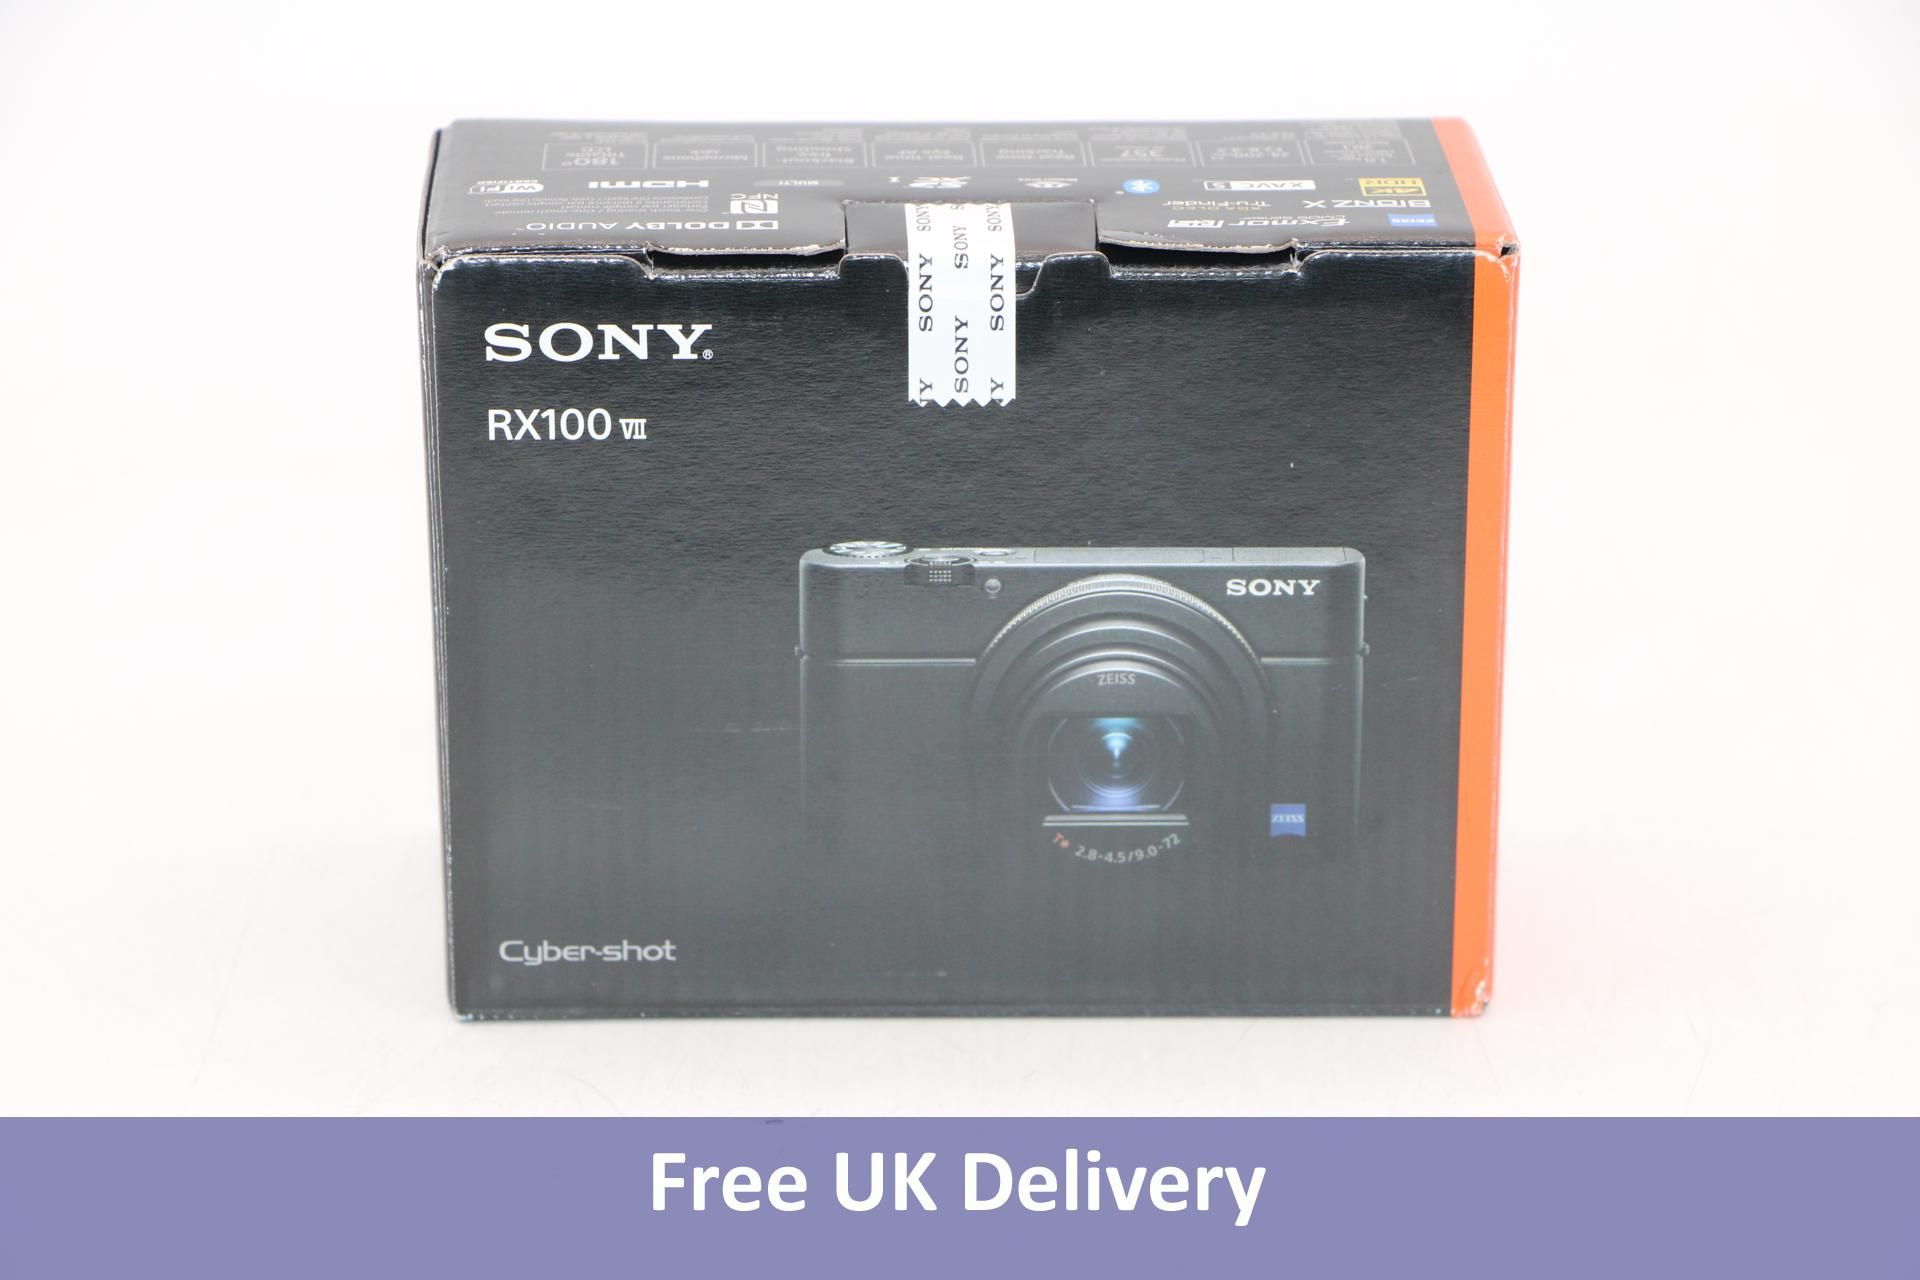 Sony Cyber-shot DSC-RX100 VII Digital Camera RX100M7, Black